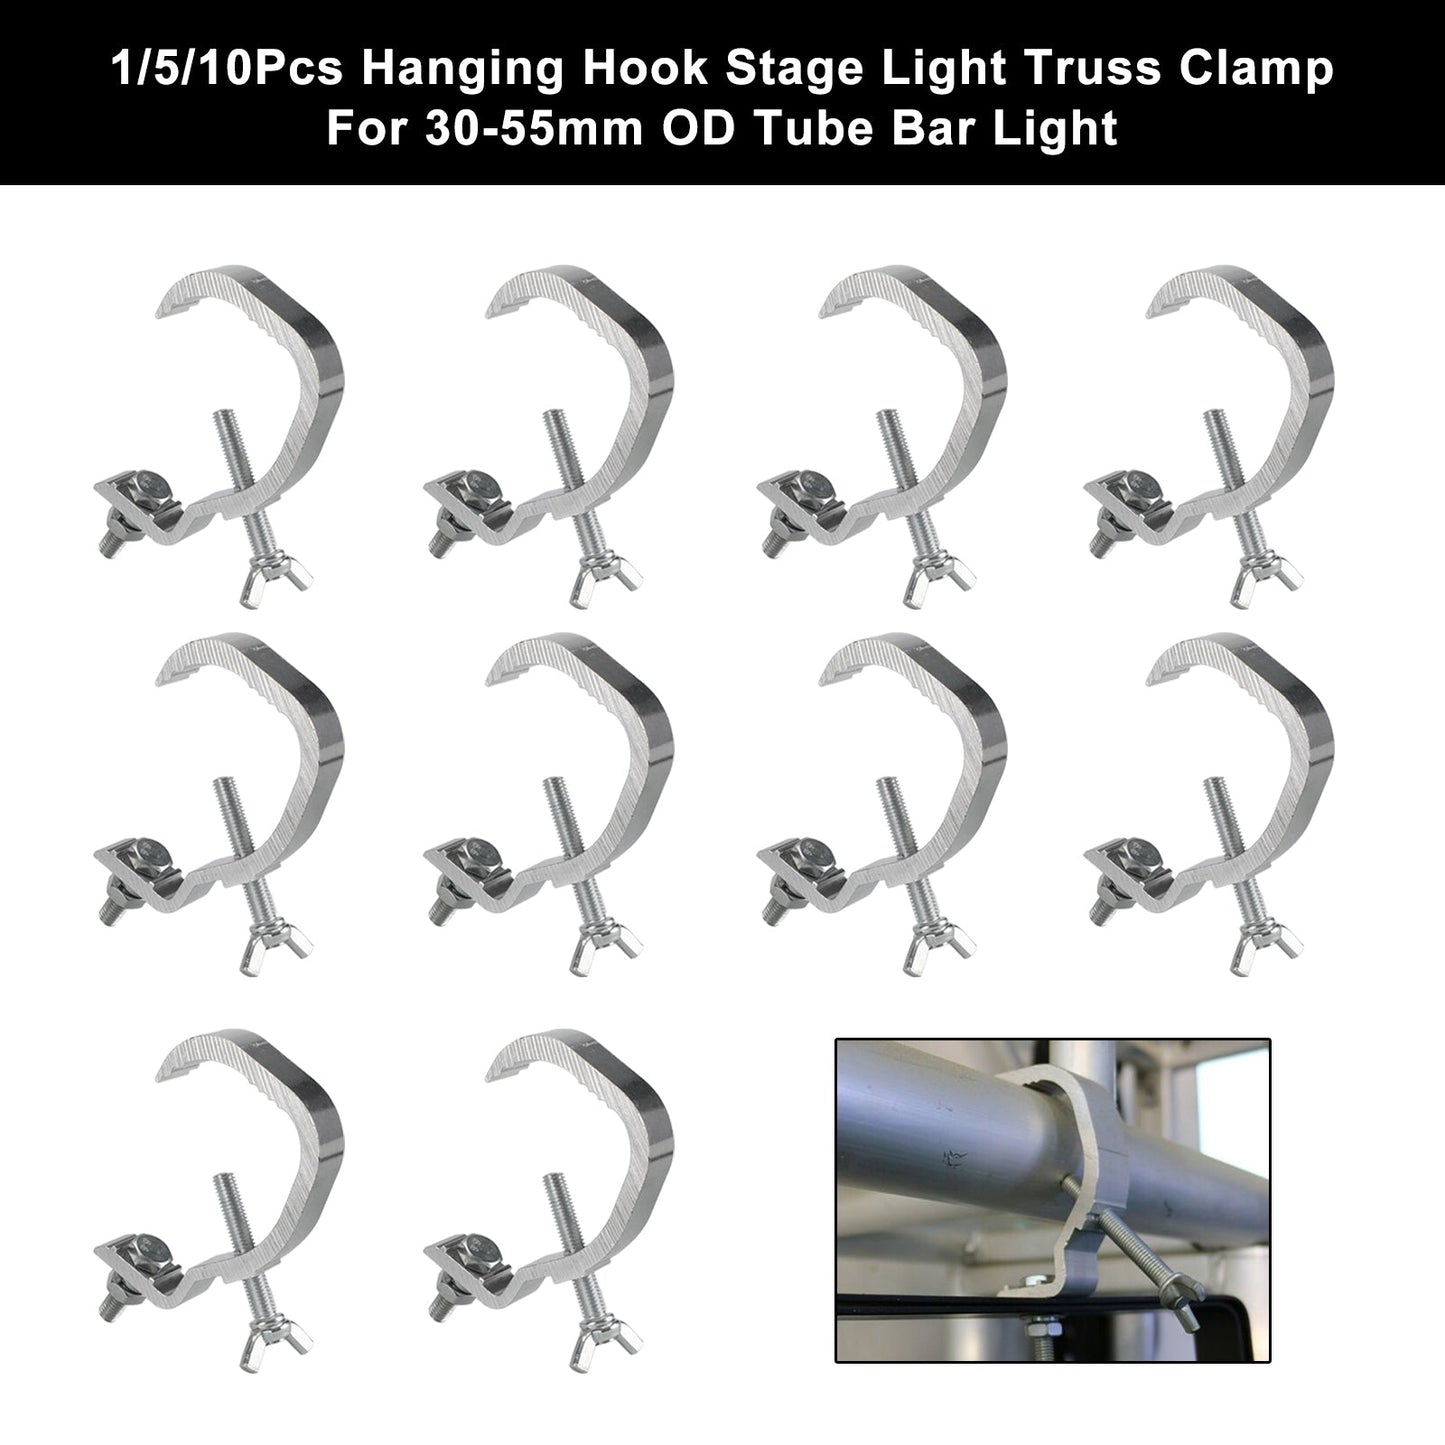 1/5/10Pcs Hanging Hook Stage Light Truss Clamp For 30-55mm OD Tube Bar Light